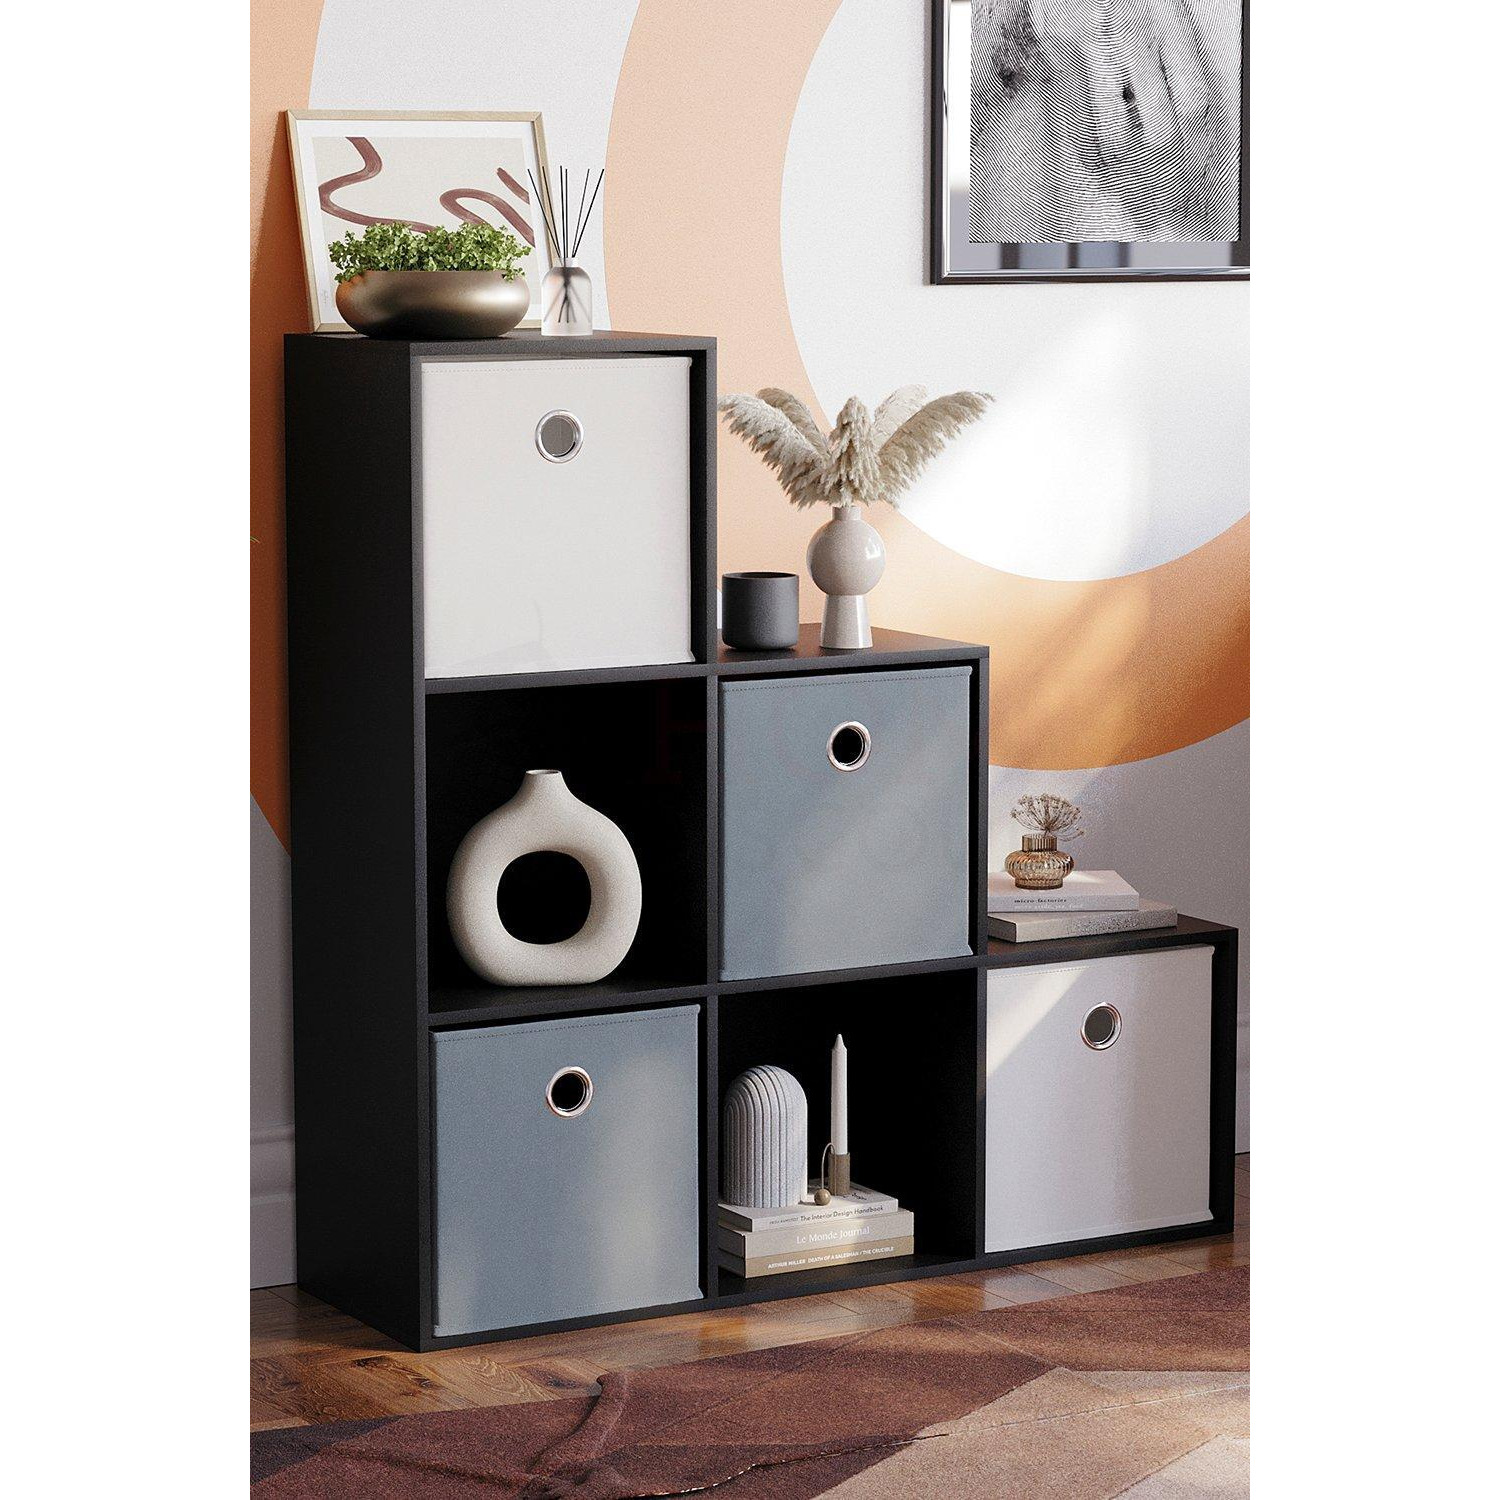 Vida Designs Durham 6 Cube Staircase Bookcase Storage Unit 965 x 965 x 290 mm - image 1